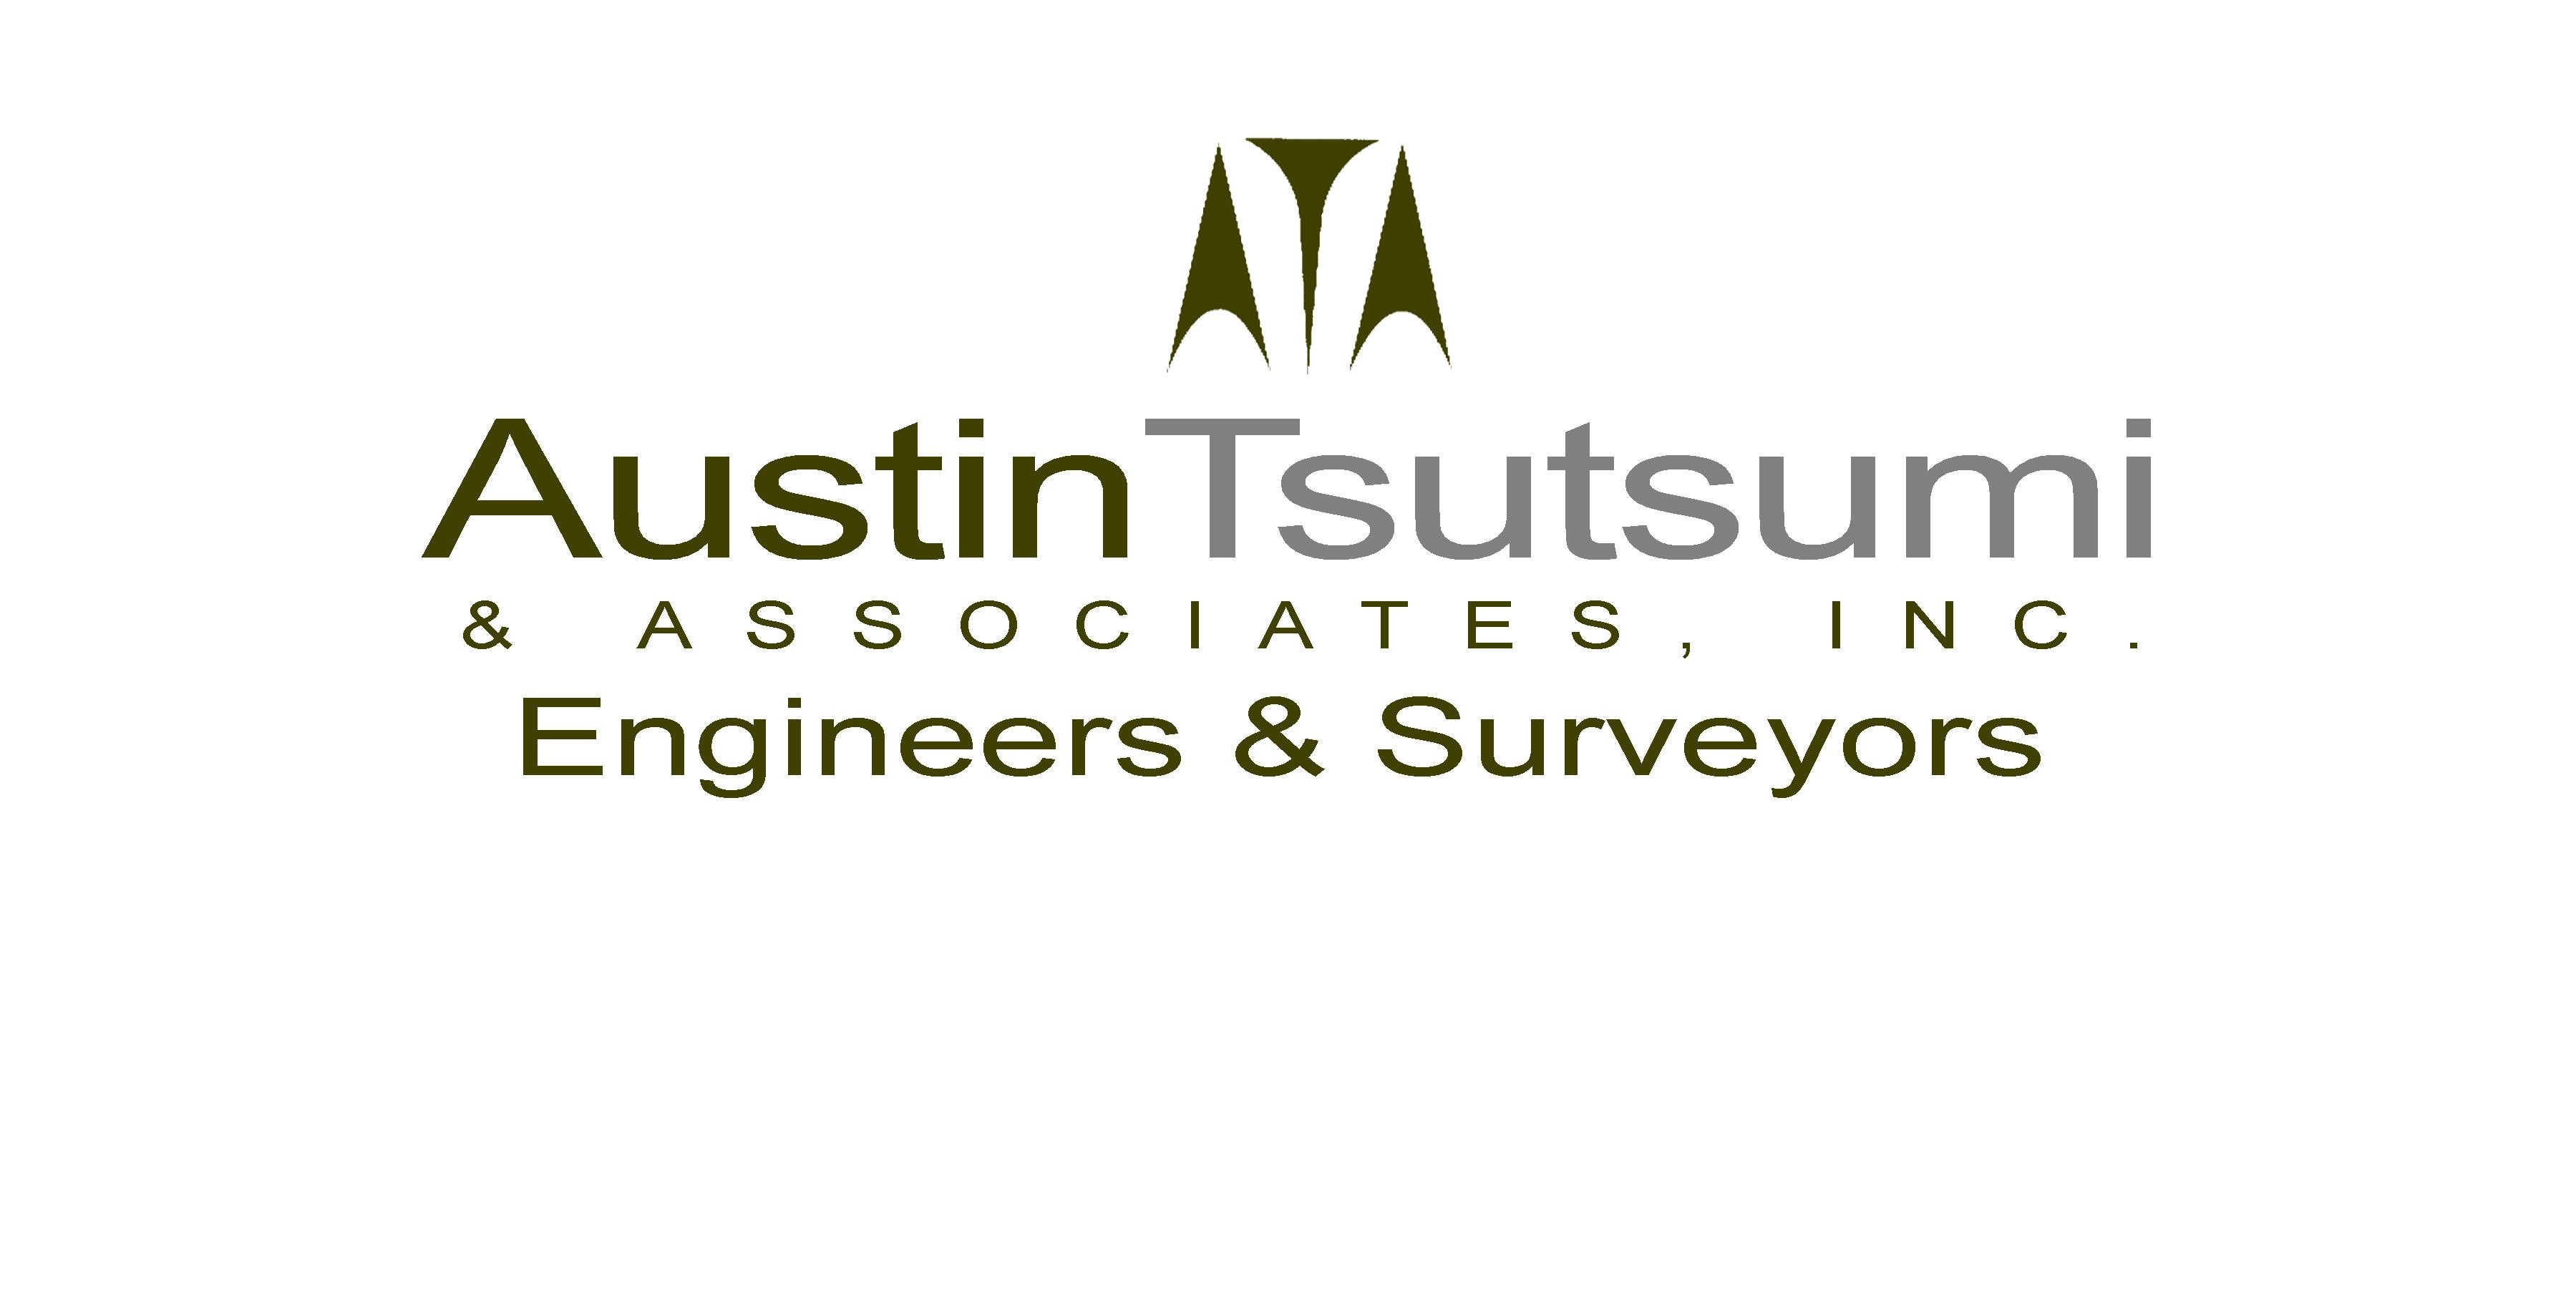 Austin Tsutsumi & Associates, Inc.